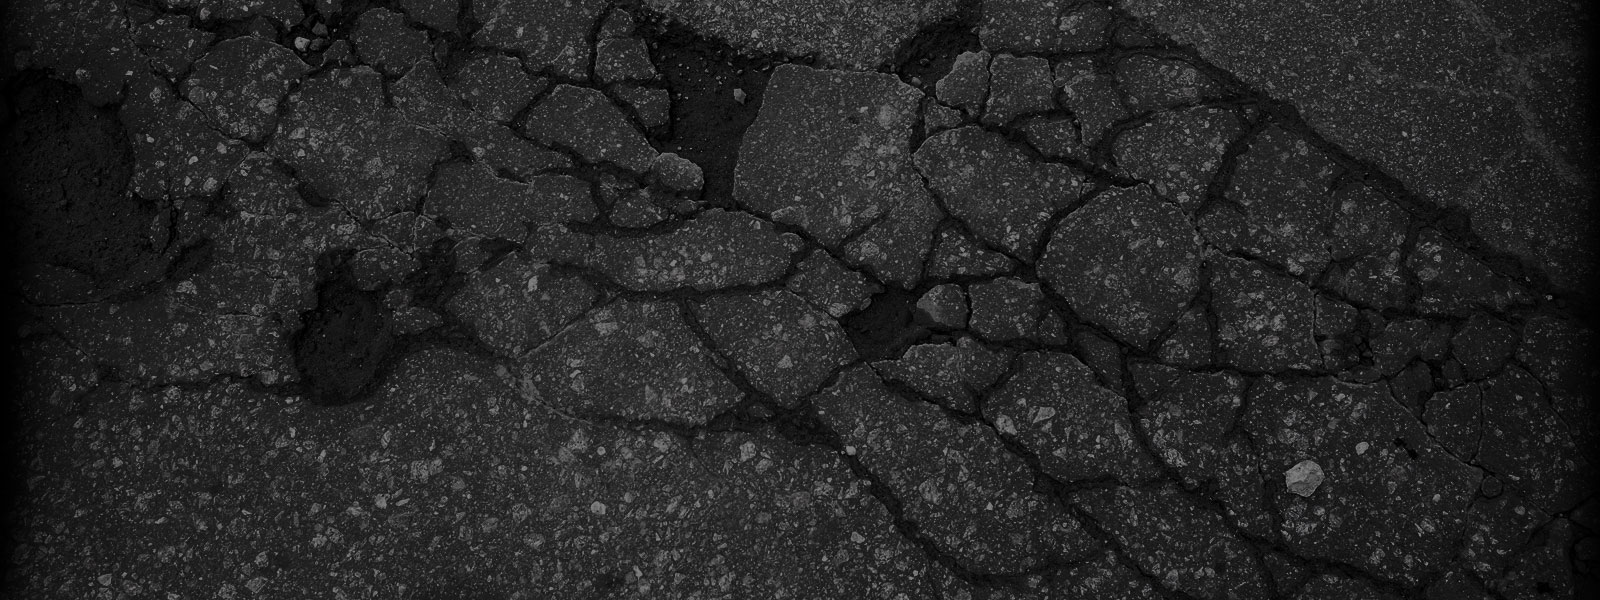 cracks in asphalt